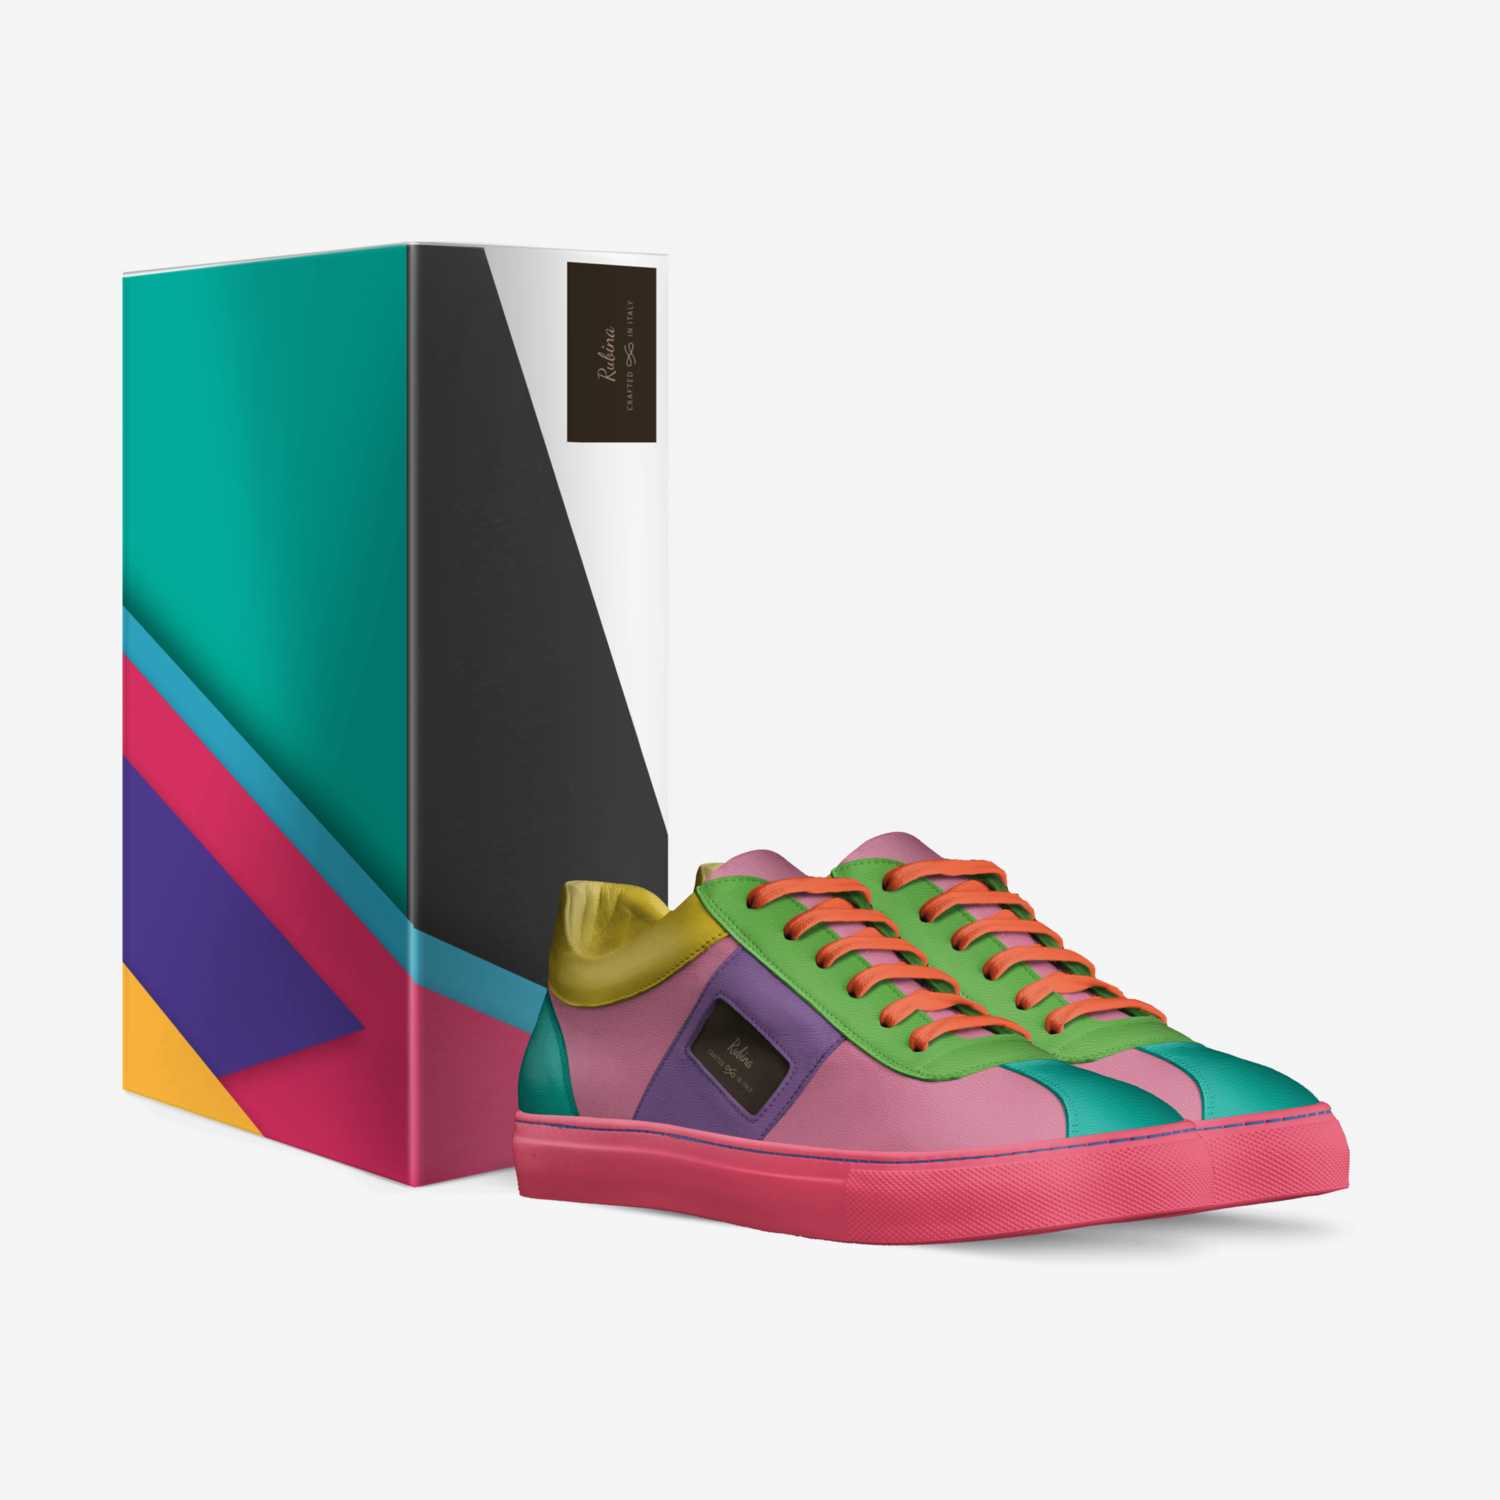 Rubina custom made in Italy shoes by Neshun Holmes | Box view